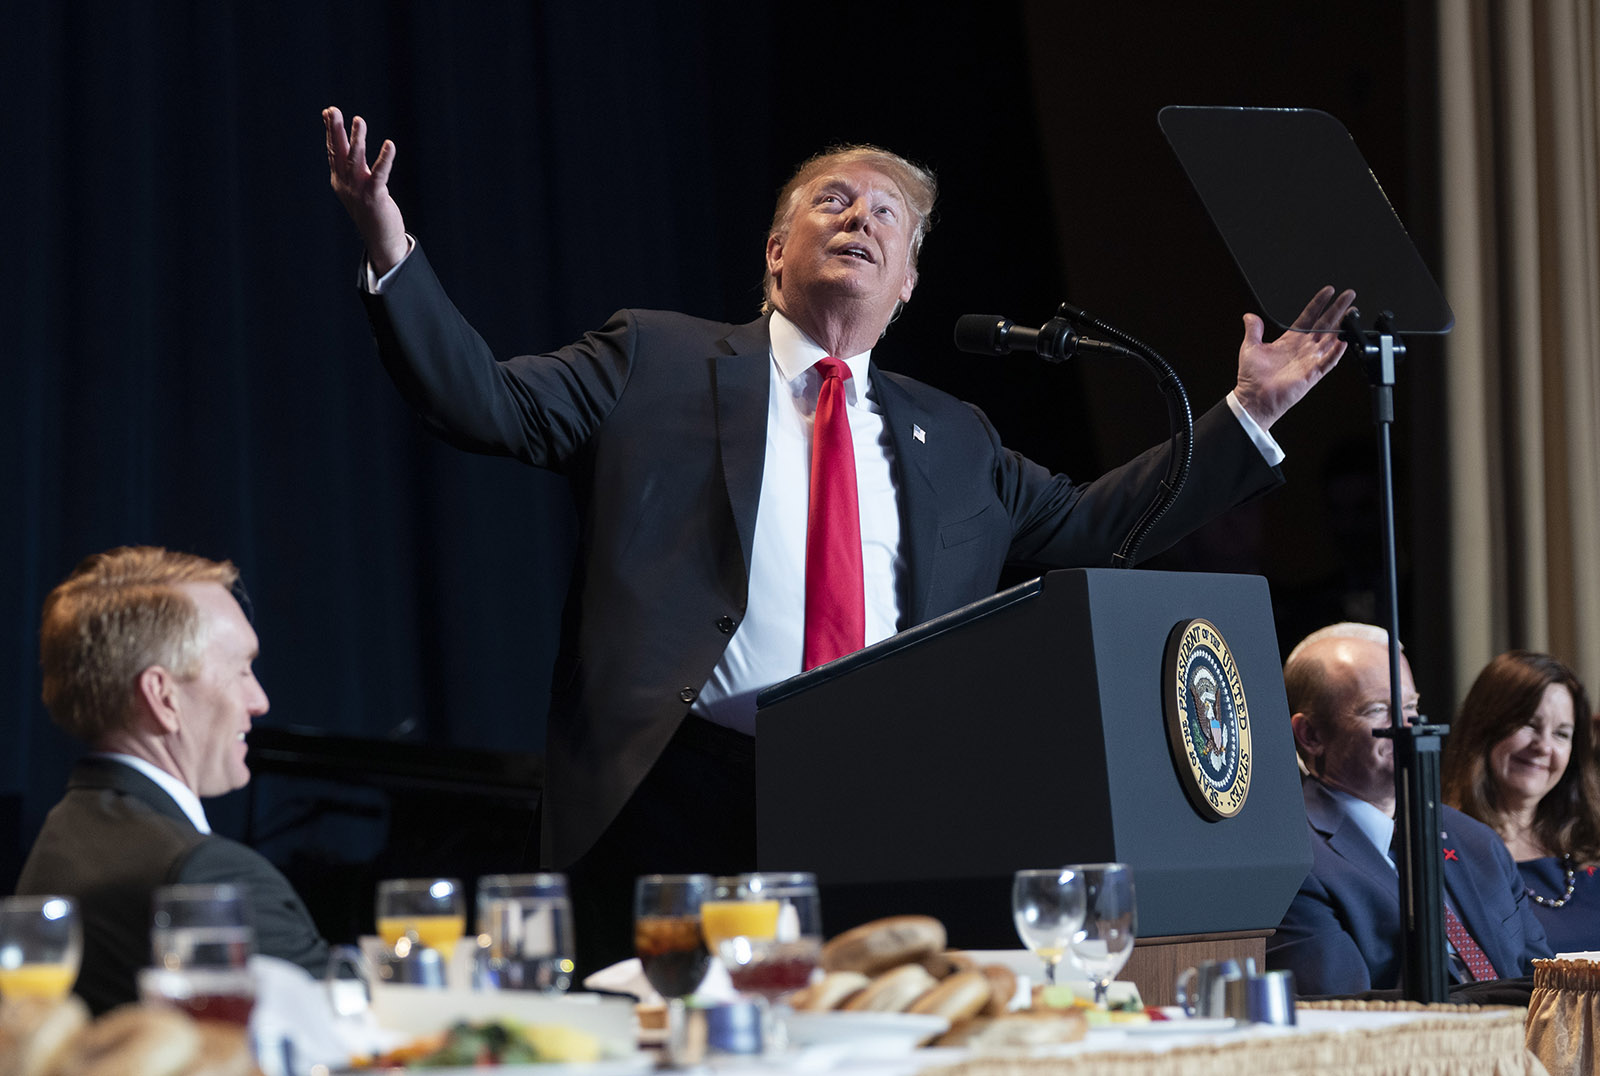 President Donald Trump speaking at the National Prayer Breakfast